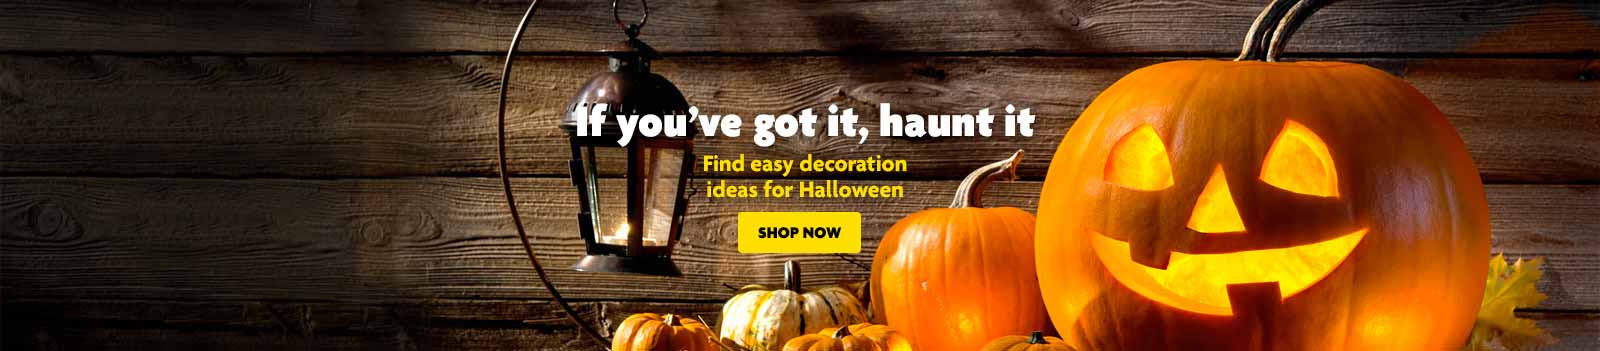 Halloween Decoration Ideas Banner